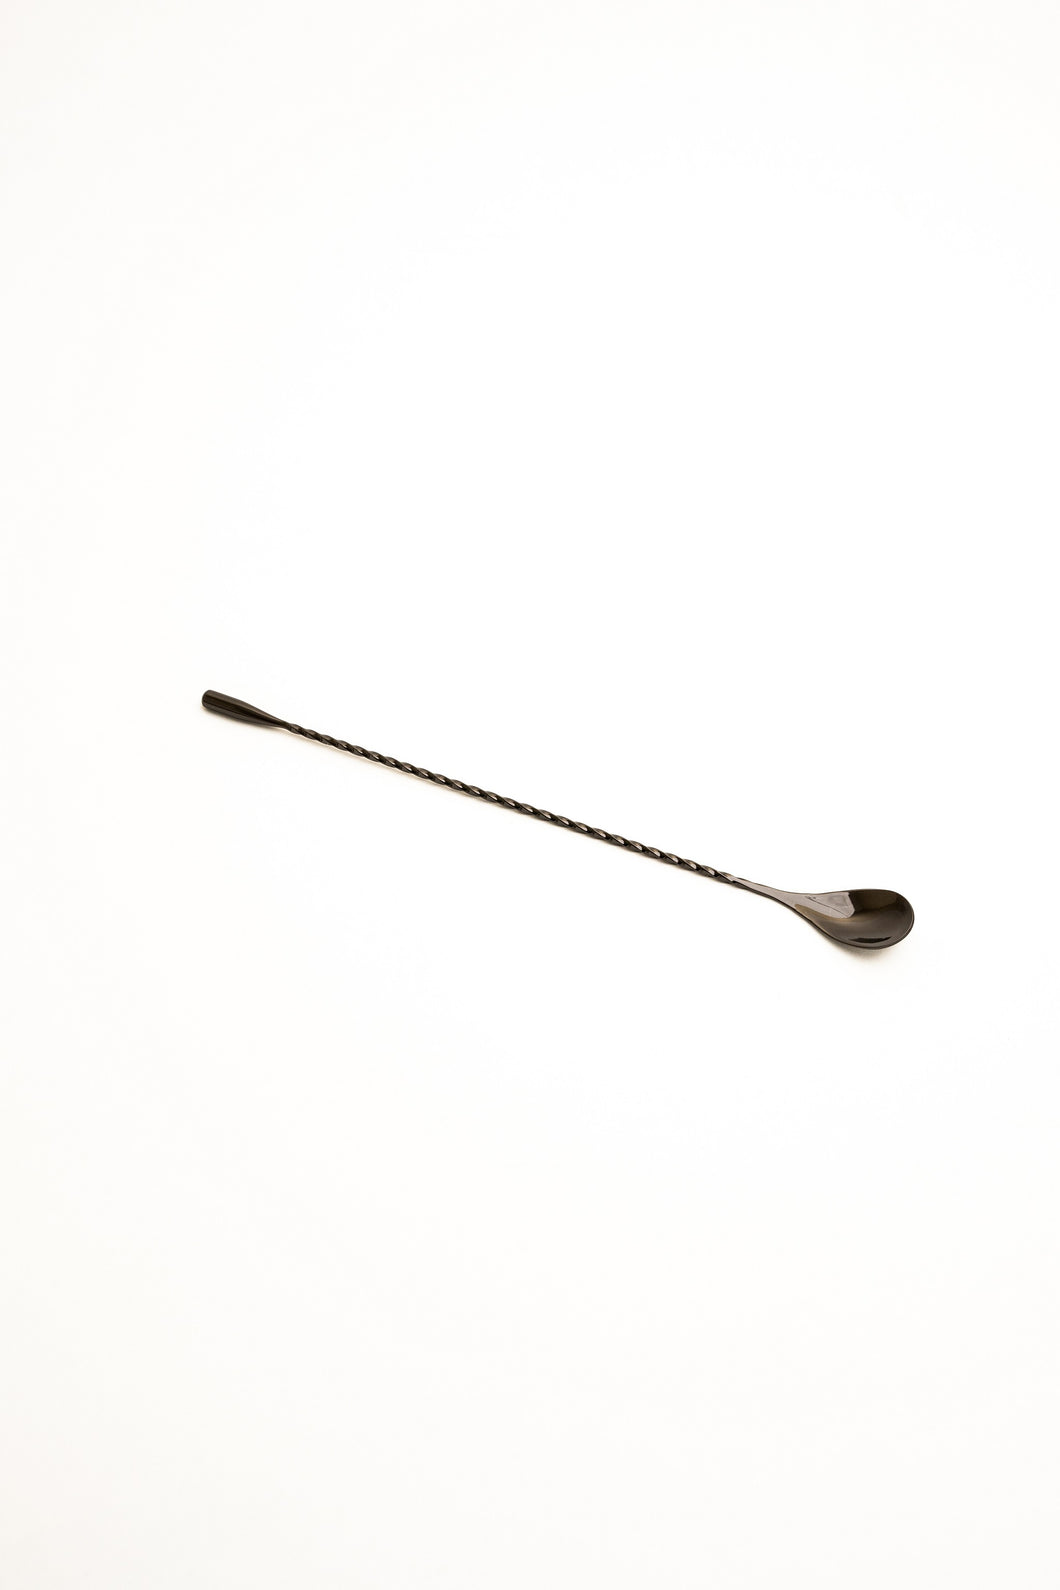 Barspoon - teardrop 30cm